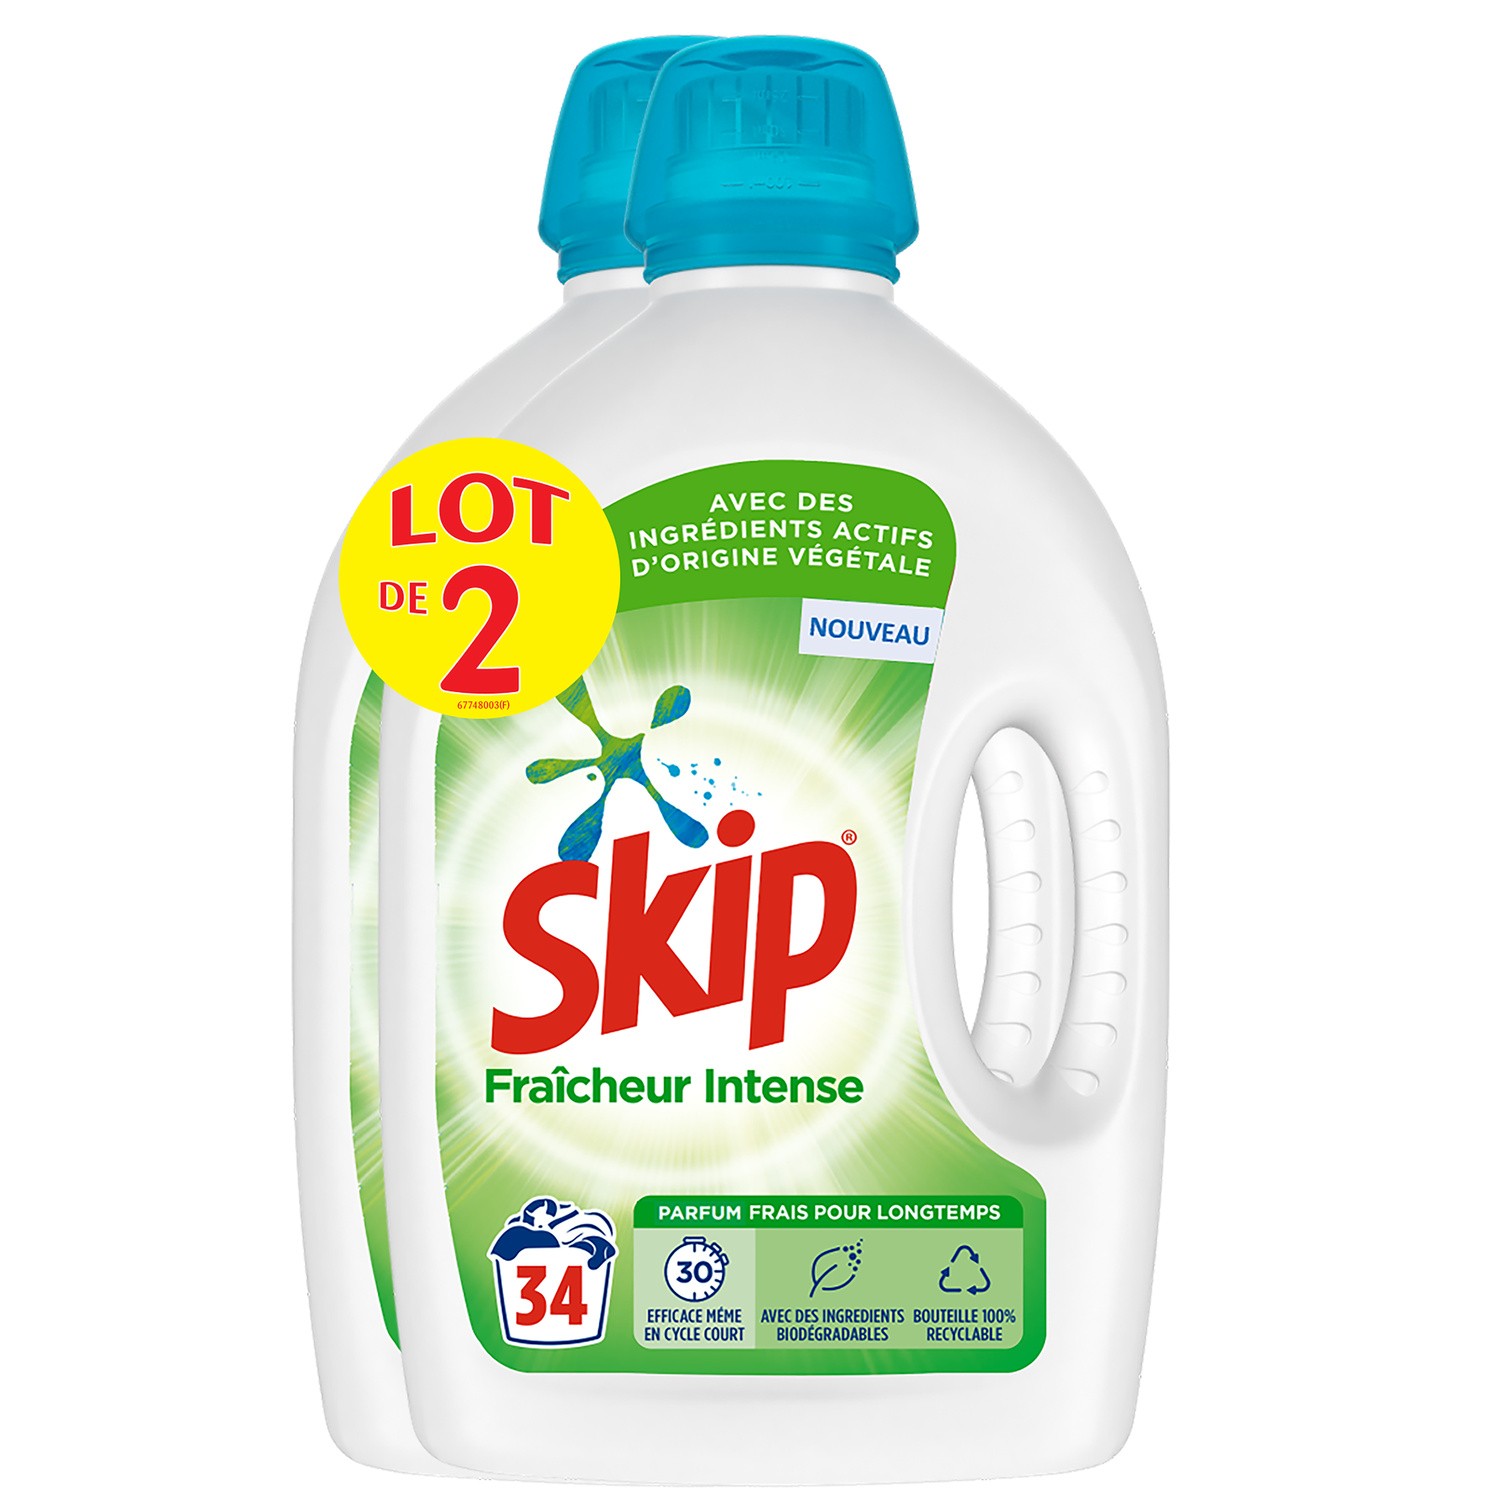 Skip Sensitive, lessive liquide, 53 lavages